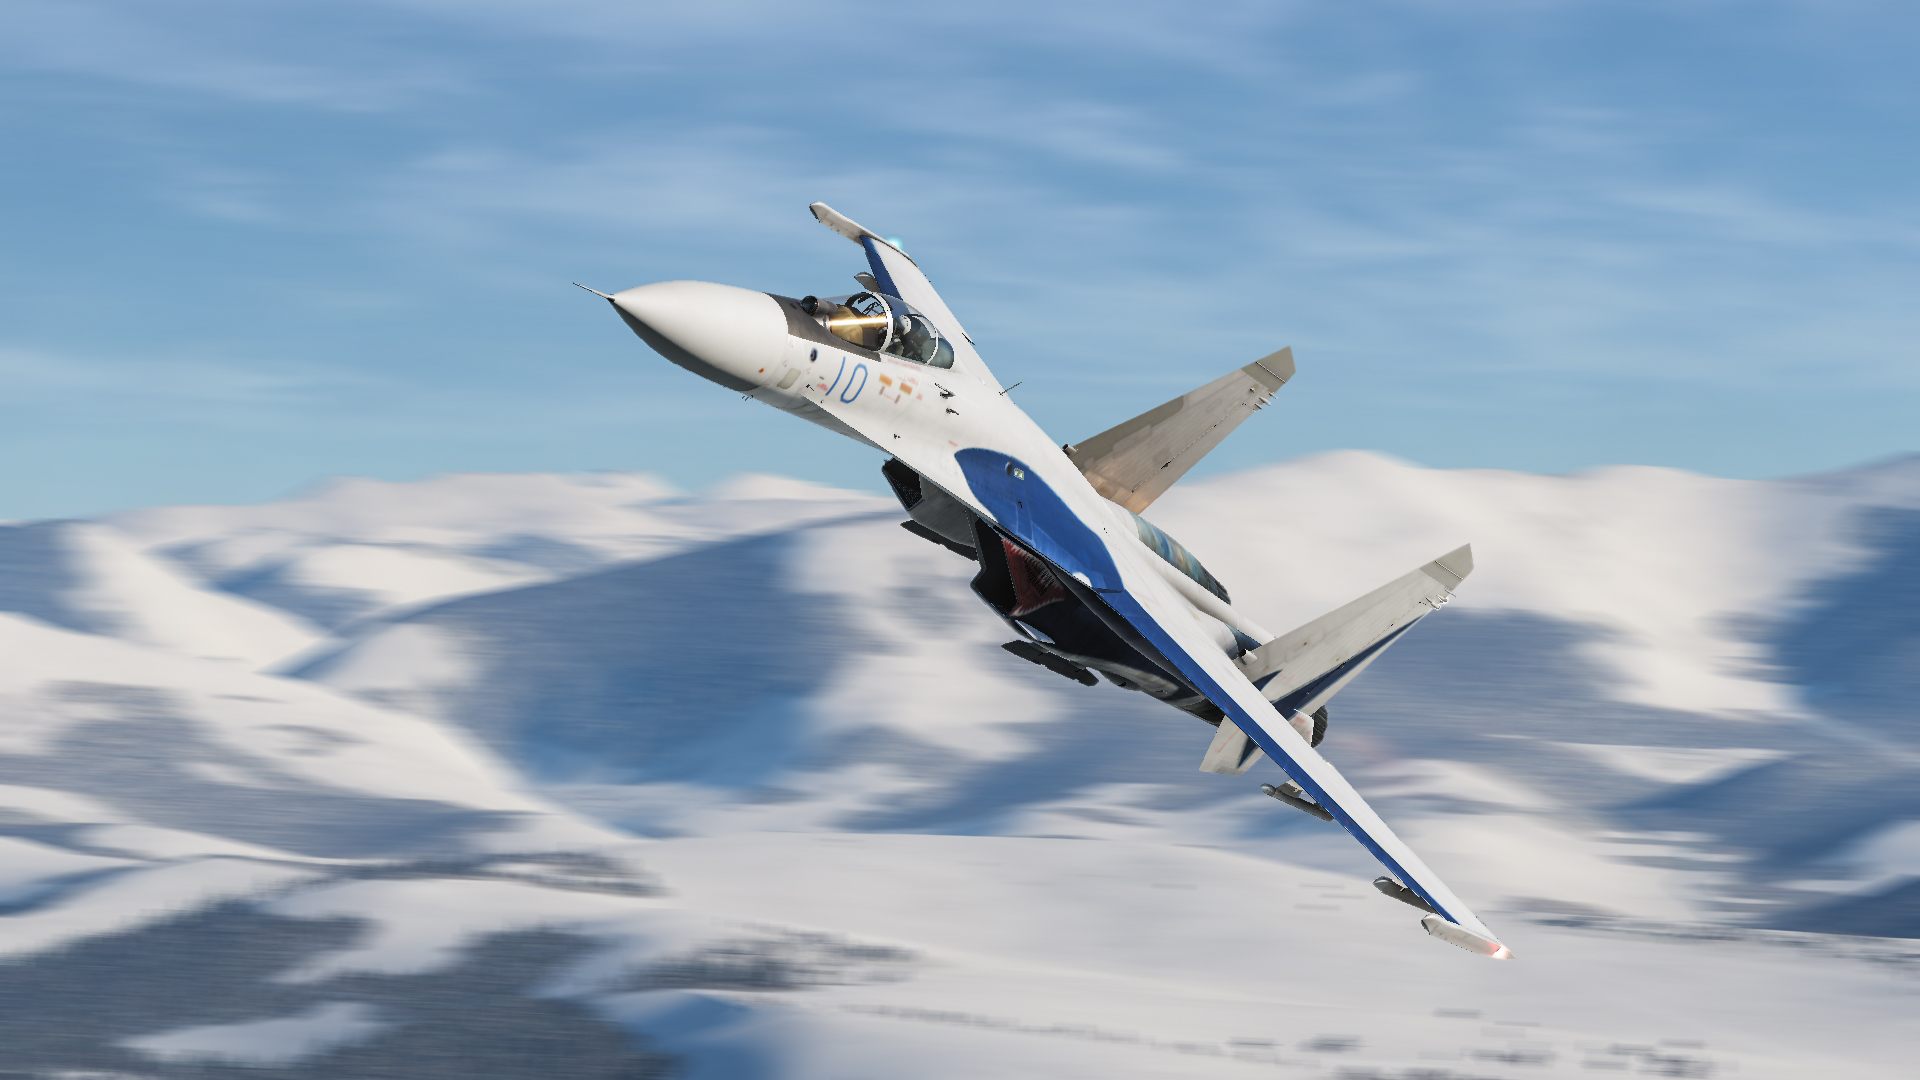 DCS: Su-27 Flanekr B - unmarked White Shark (Russian Snowflake) Skin